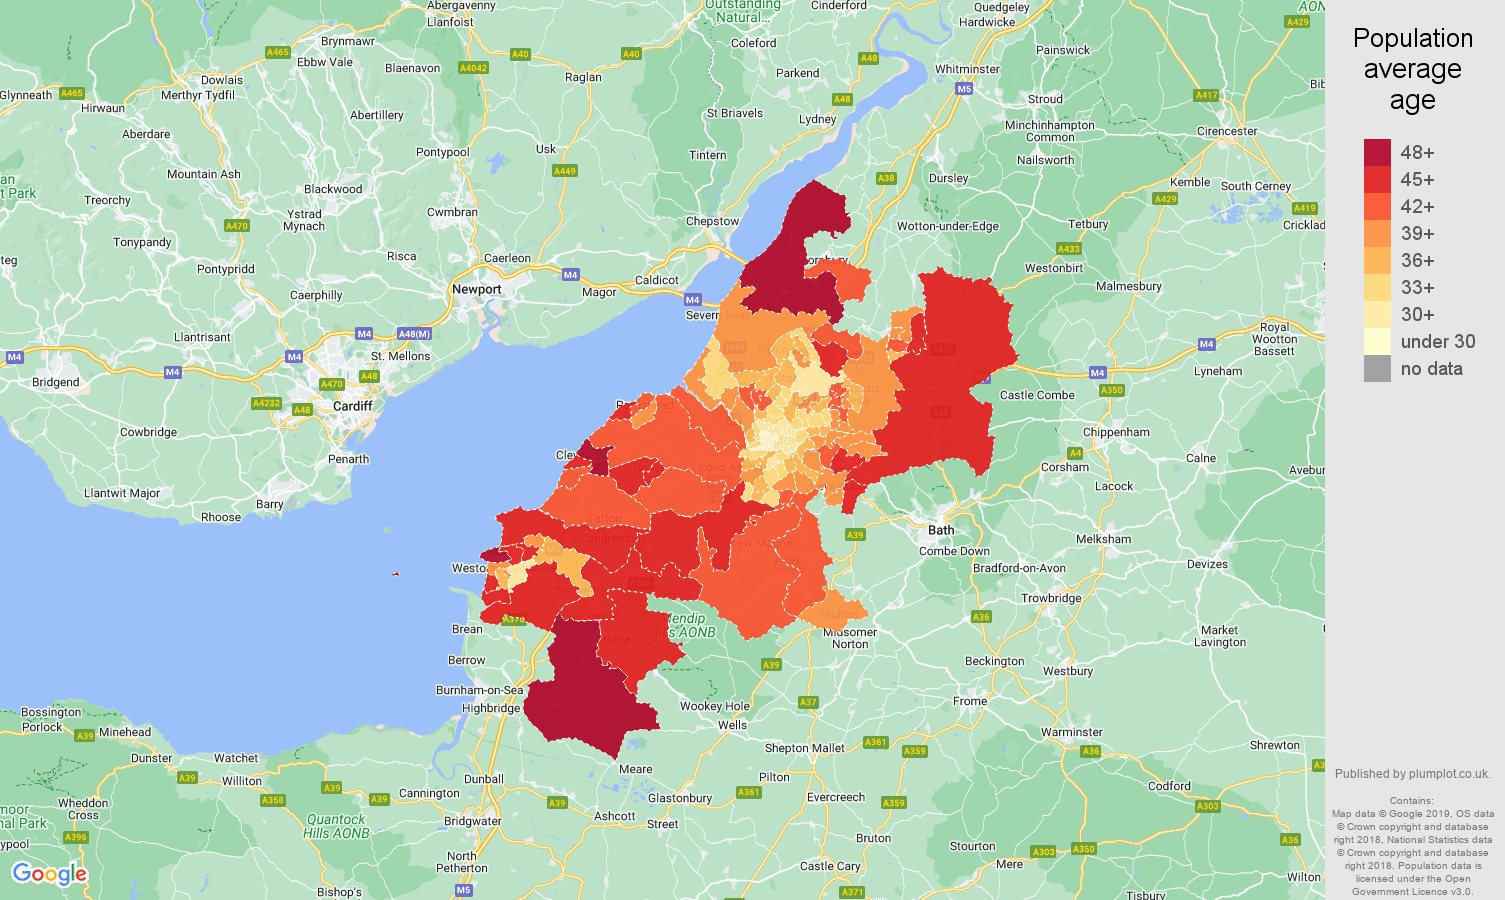 Bristol population average age map